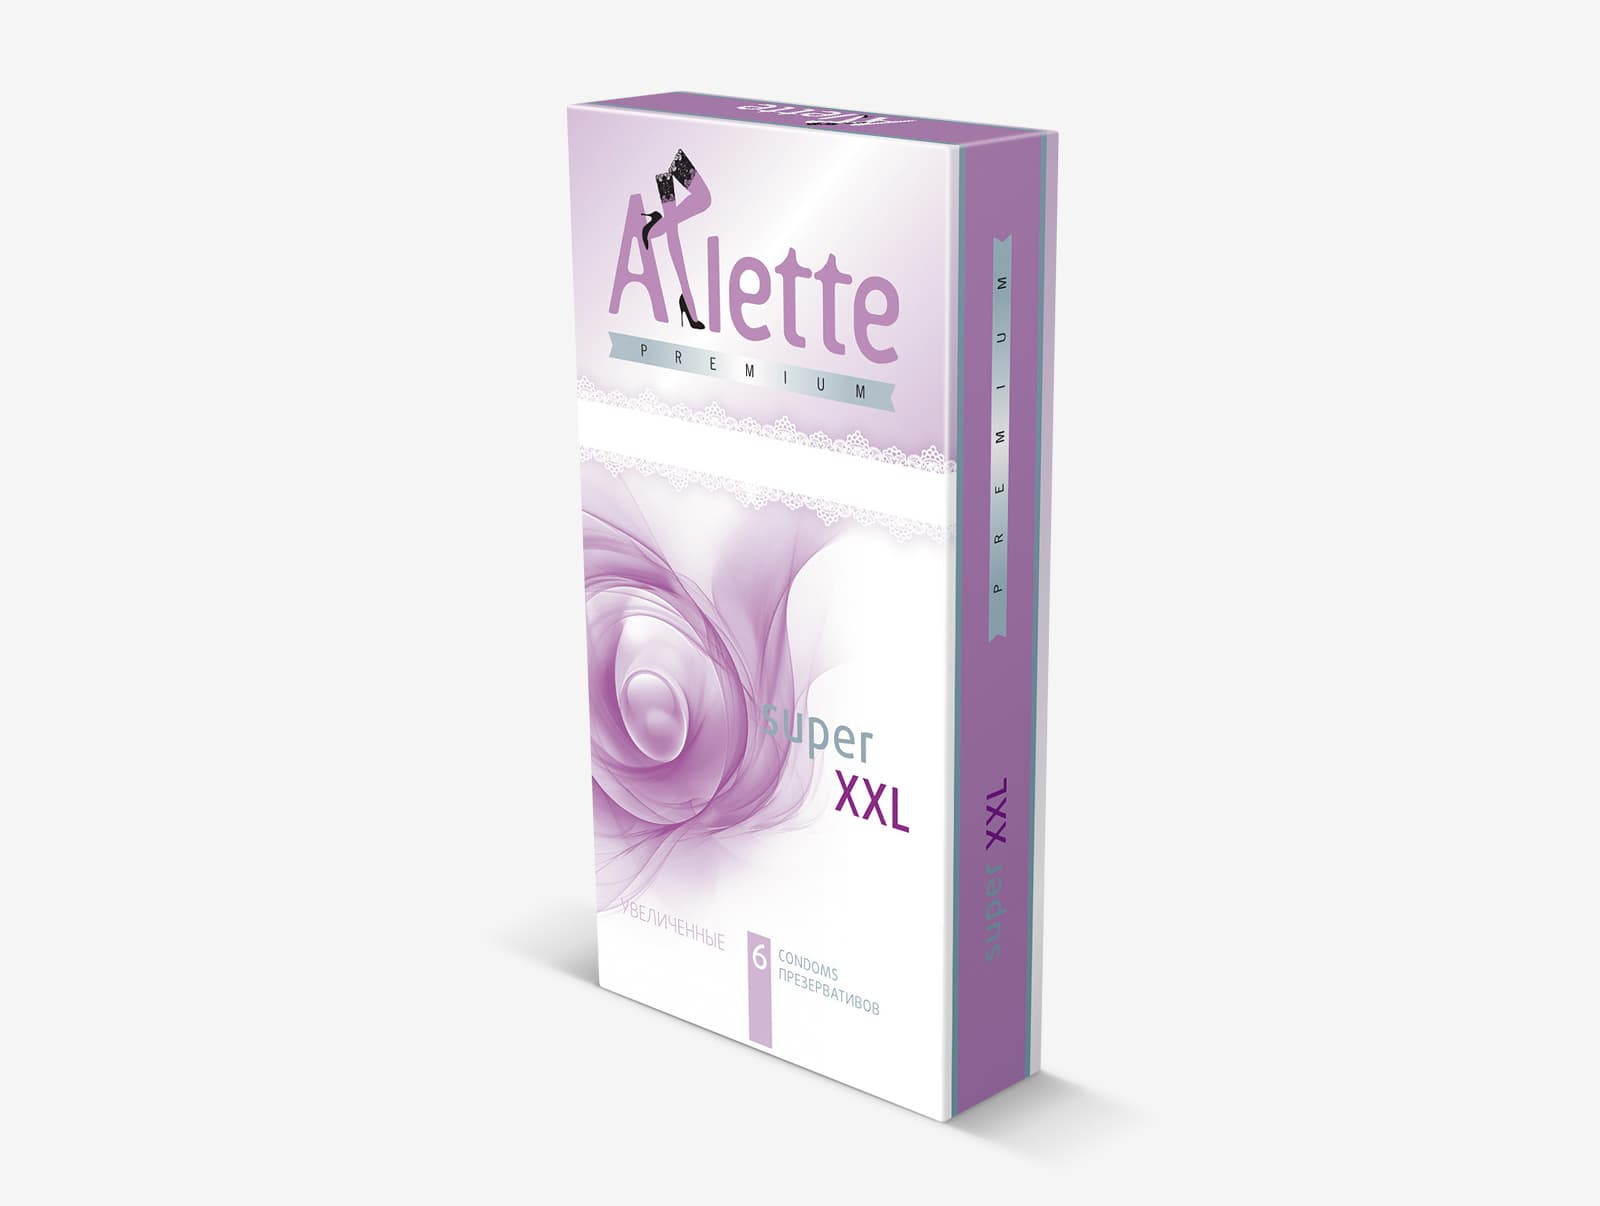 Дизайн серии упаковок презервативов бренда Arlette